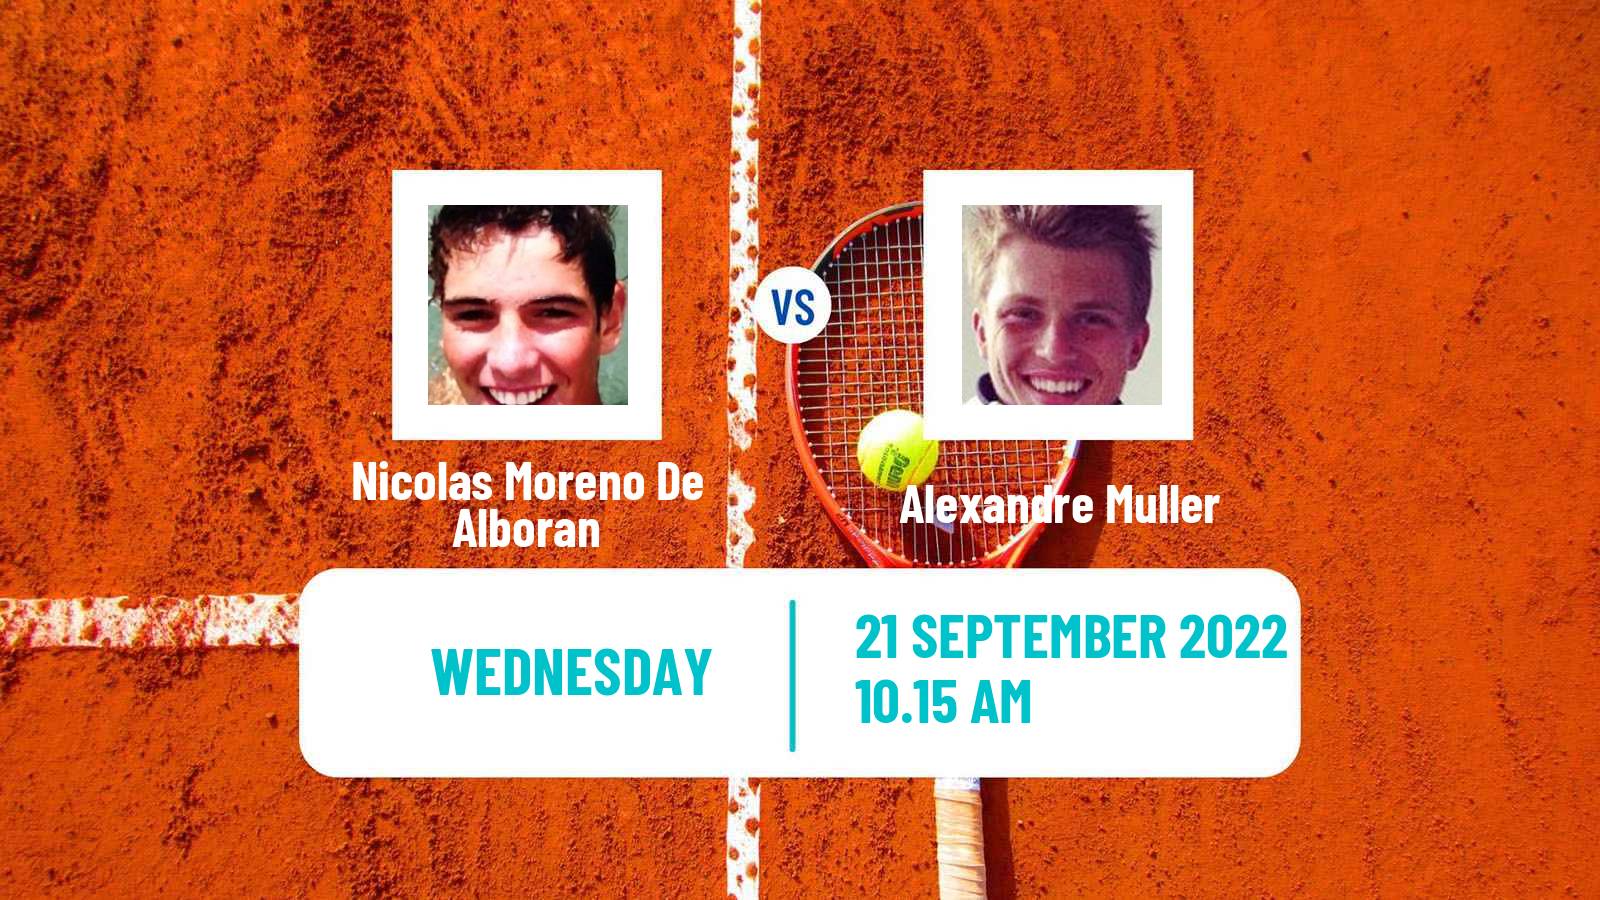 Tennis ATP Challenger Nicolas Moreno De Alboran - Alexandre Muller